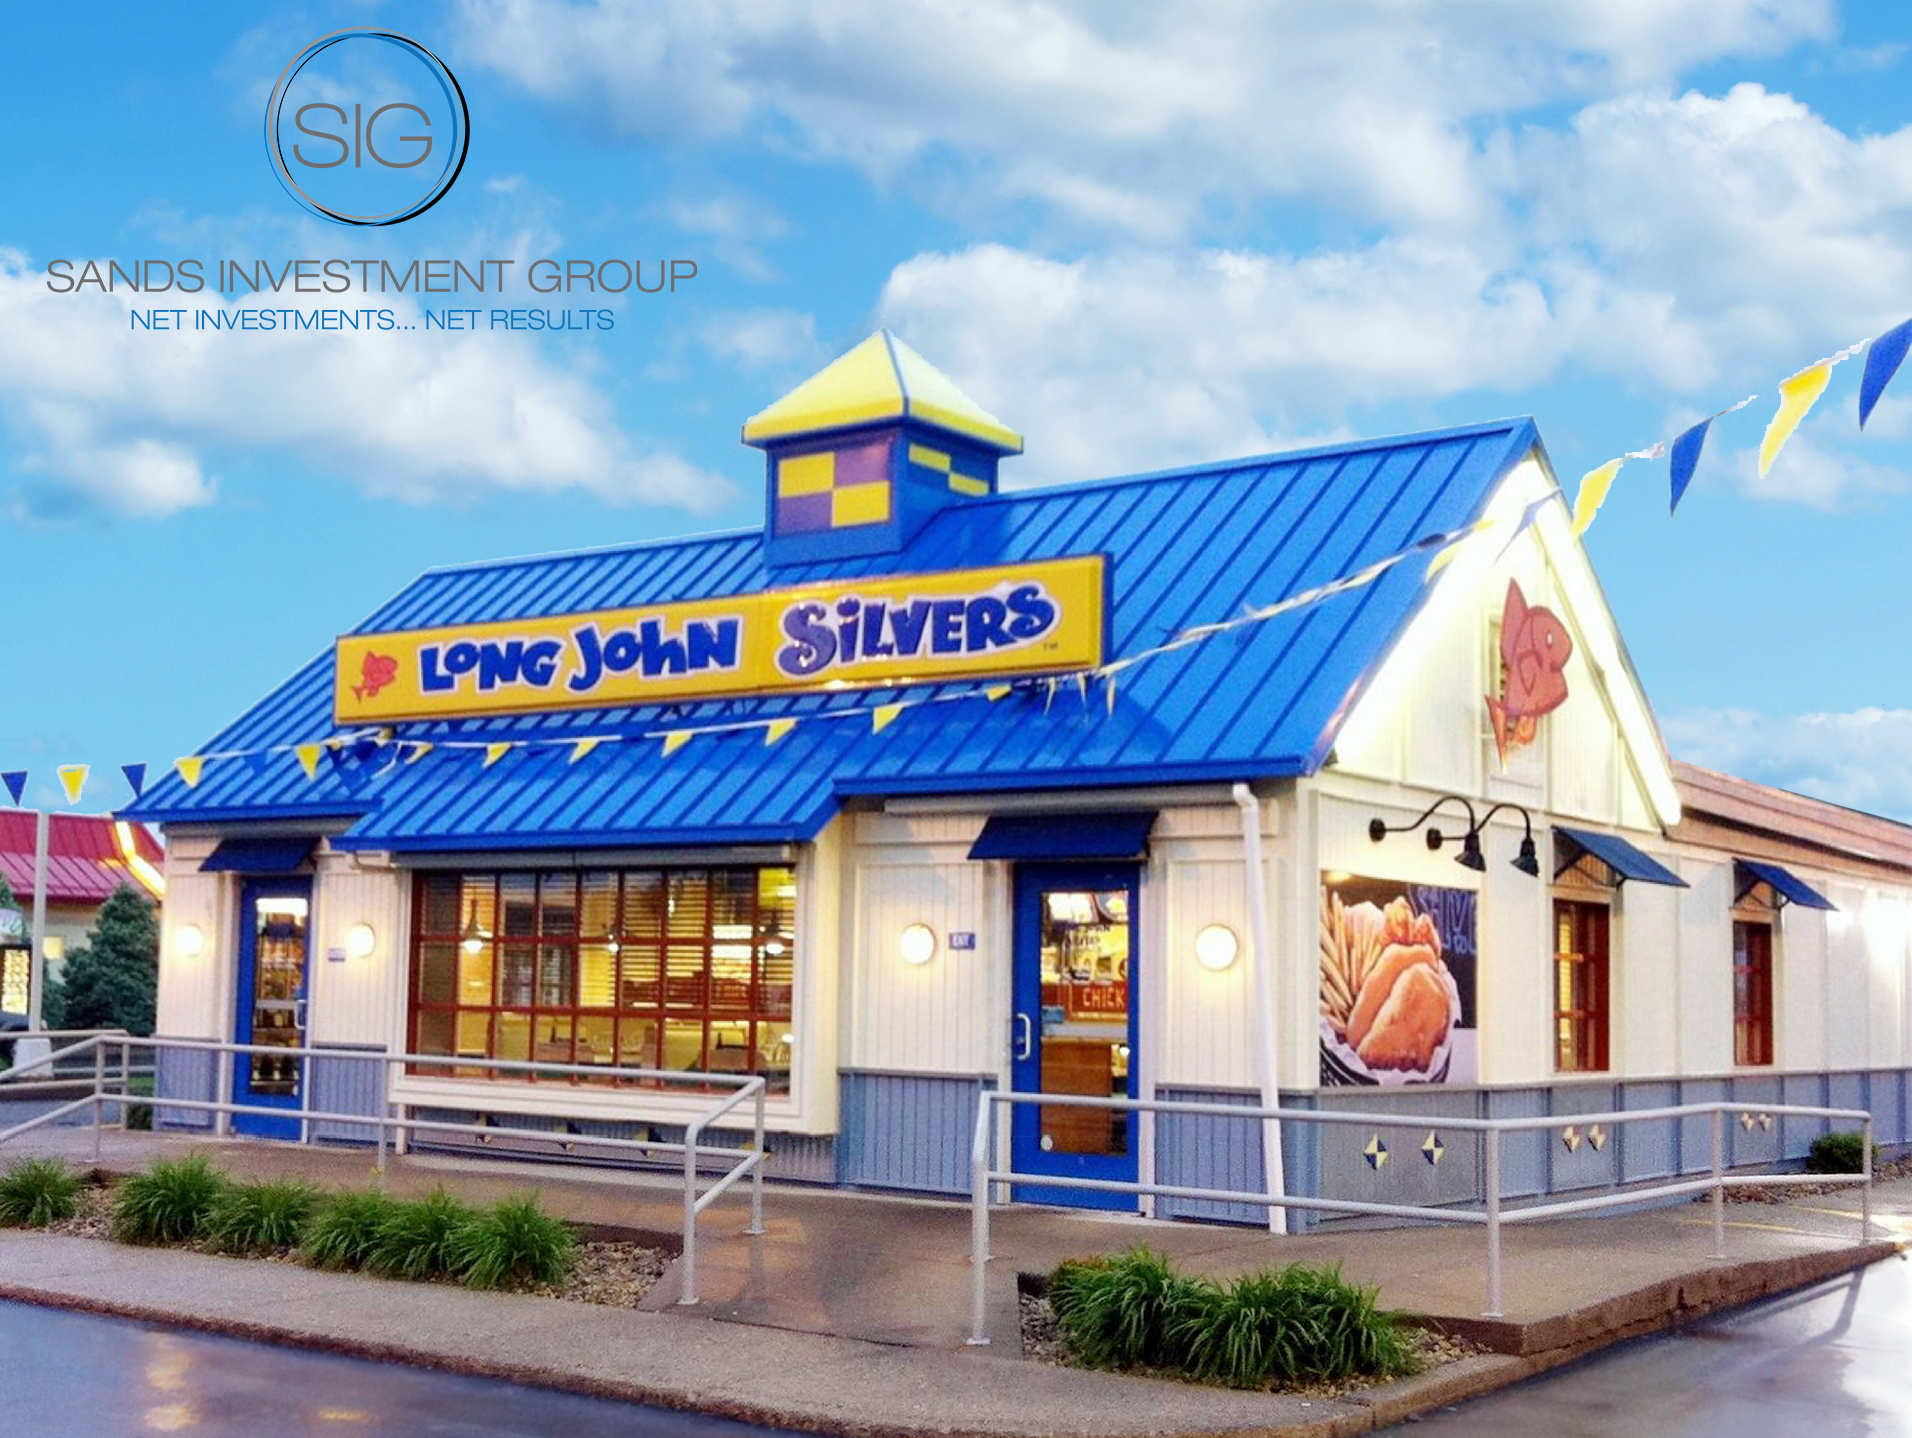 LONG JOHN SILVER'S - 33 Photos & 28 Reviews - 378 S Ave, Bloomington,  Minnesota - Fast Food - Restaurant Reviews - Phone Number - Menu - Yelp